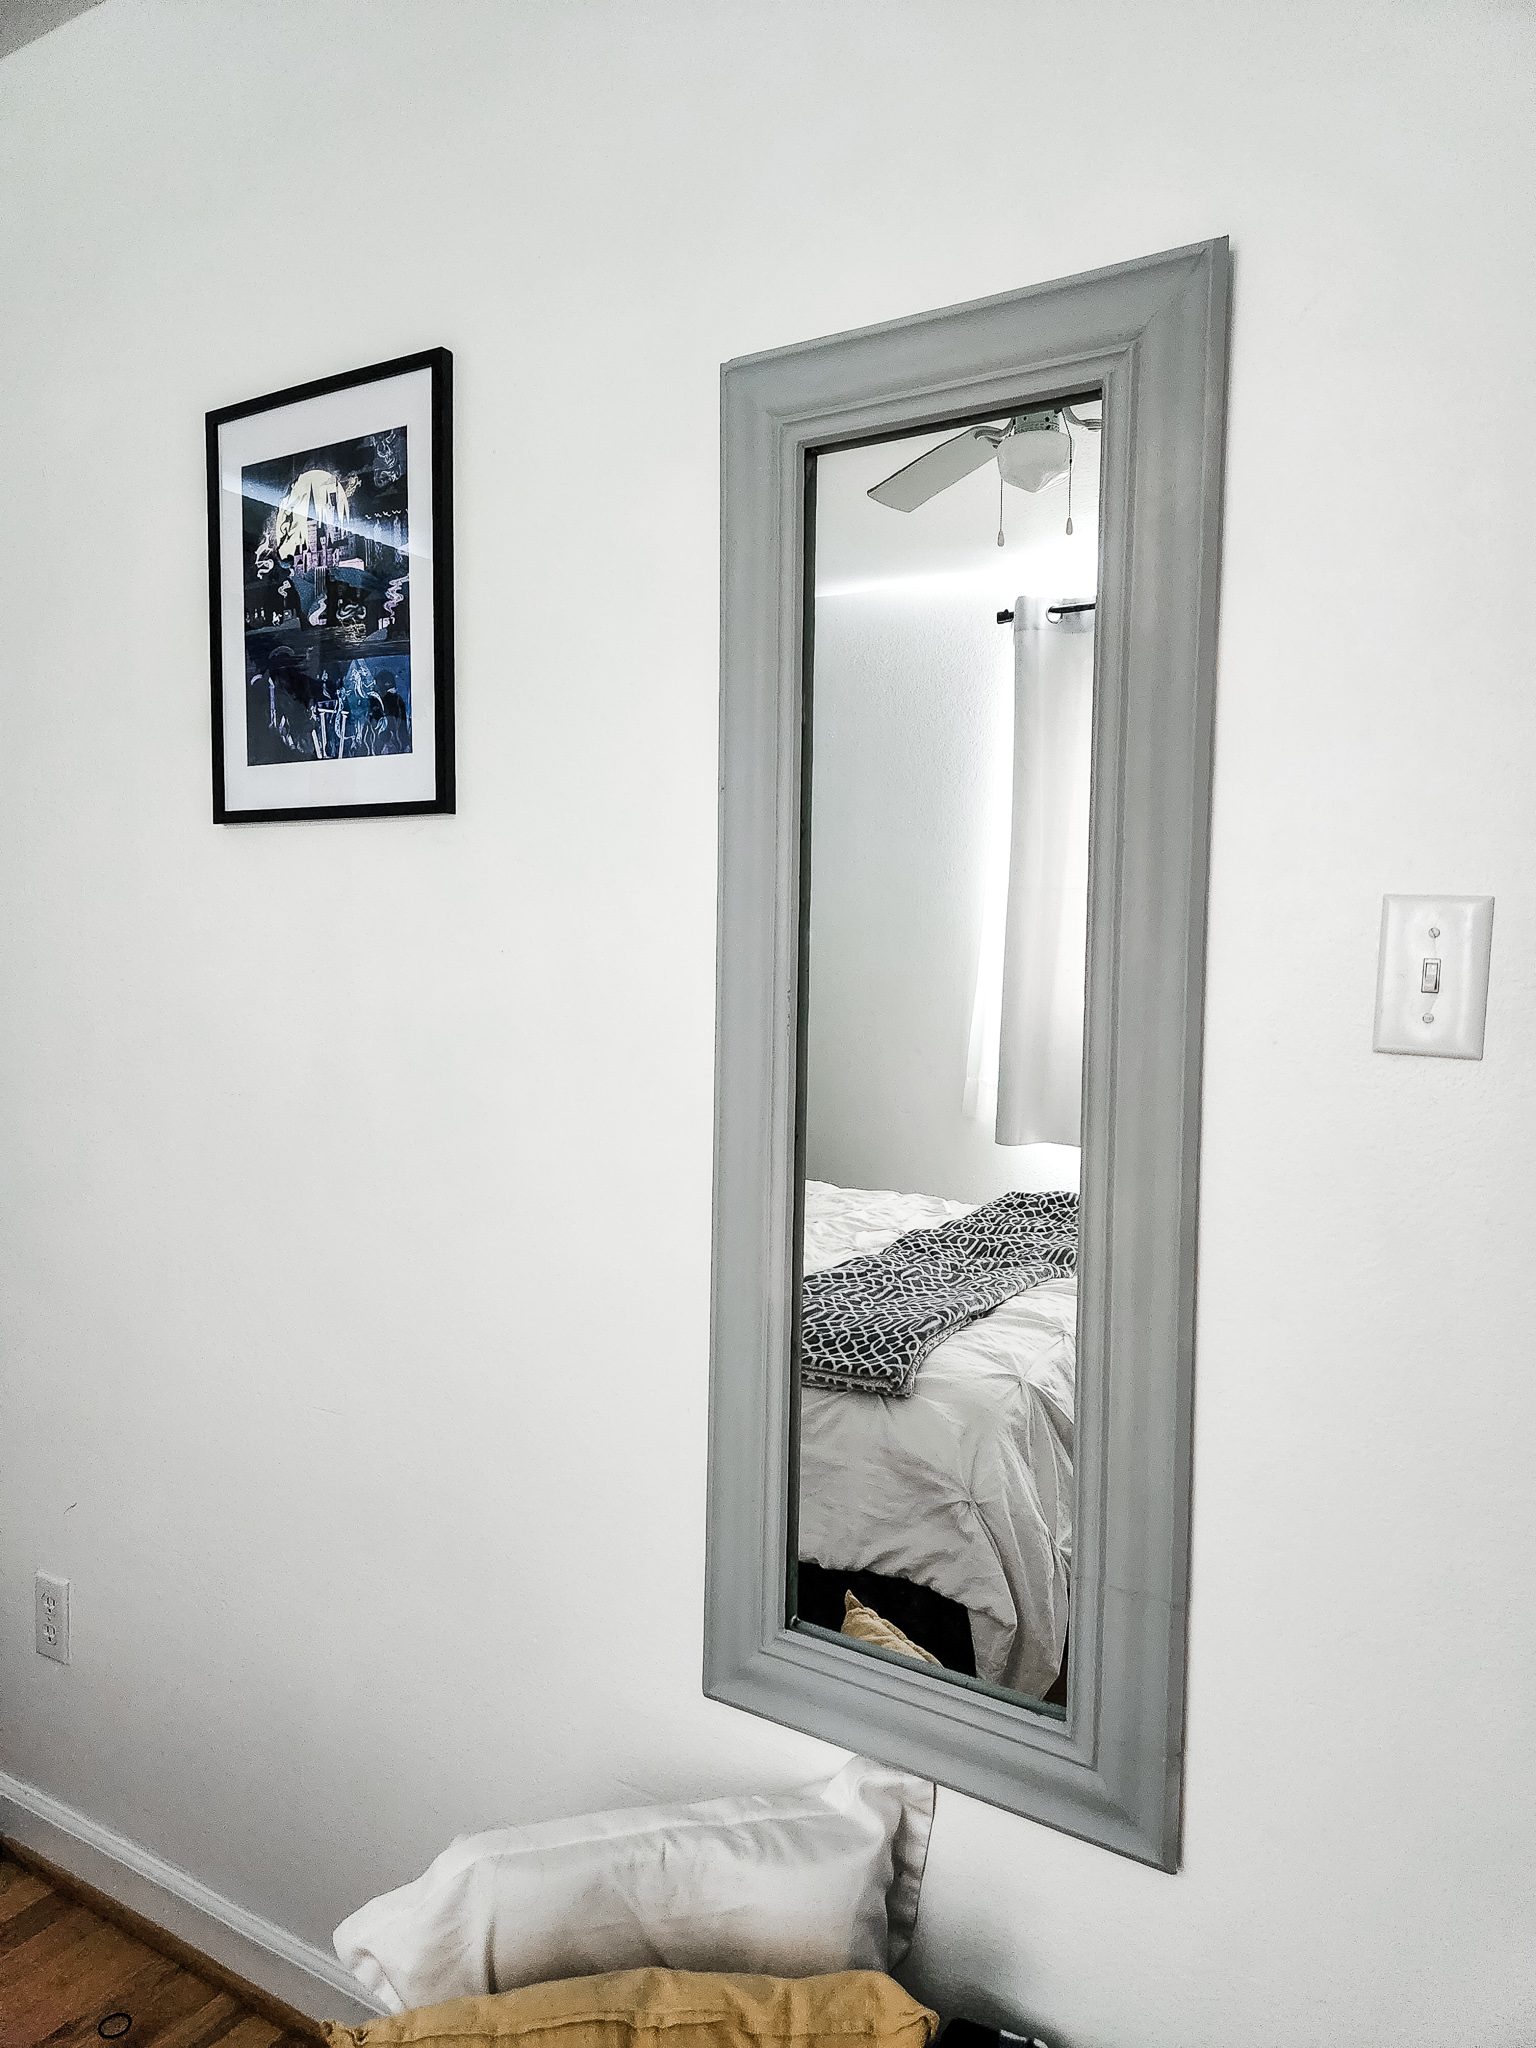 DIY Full-Length Wall Mirror - With Love, Joey